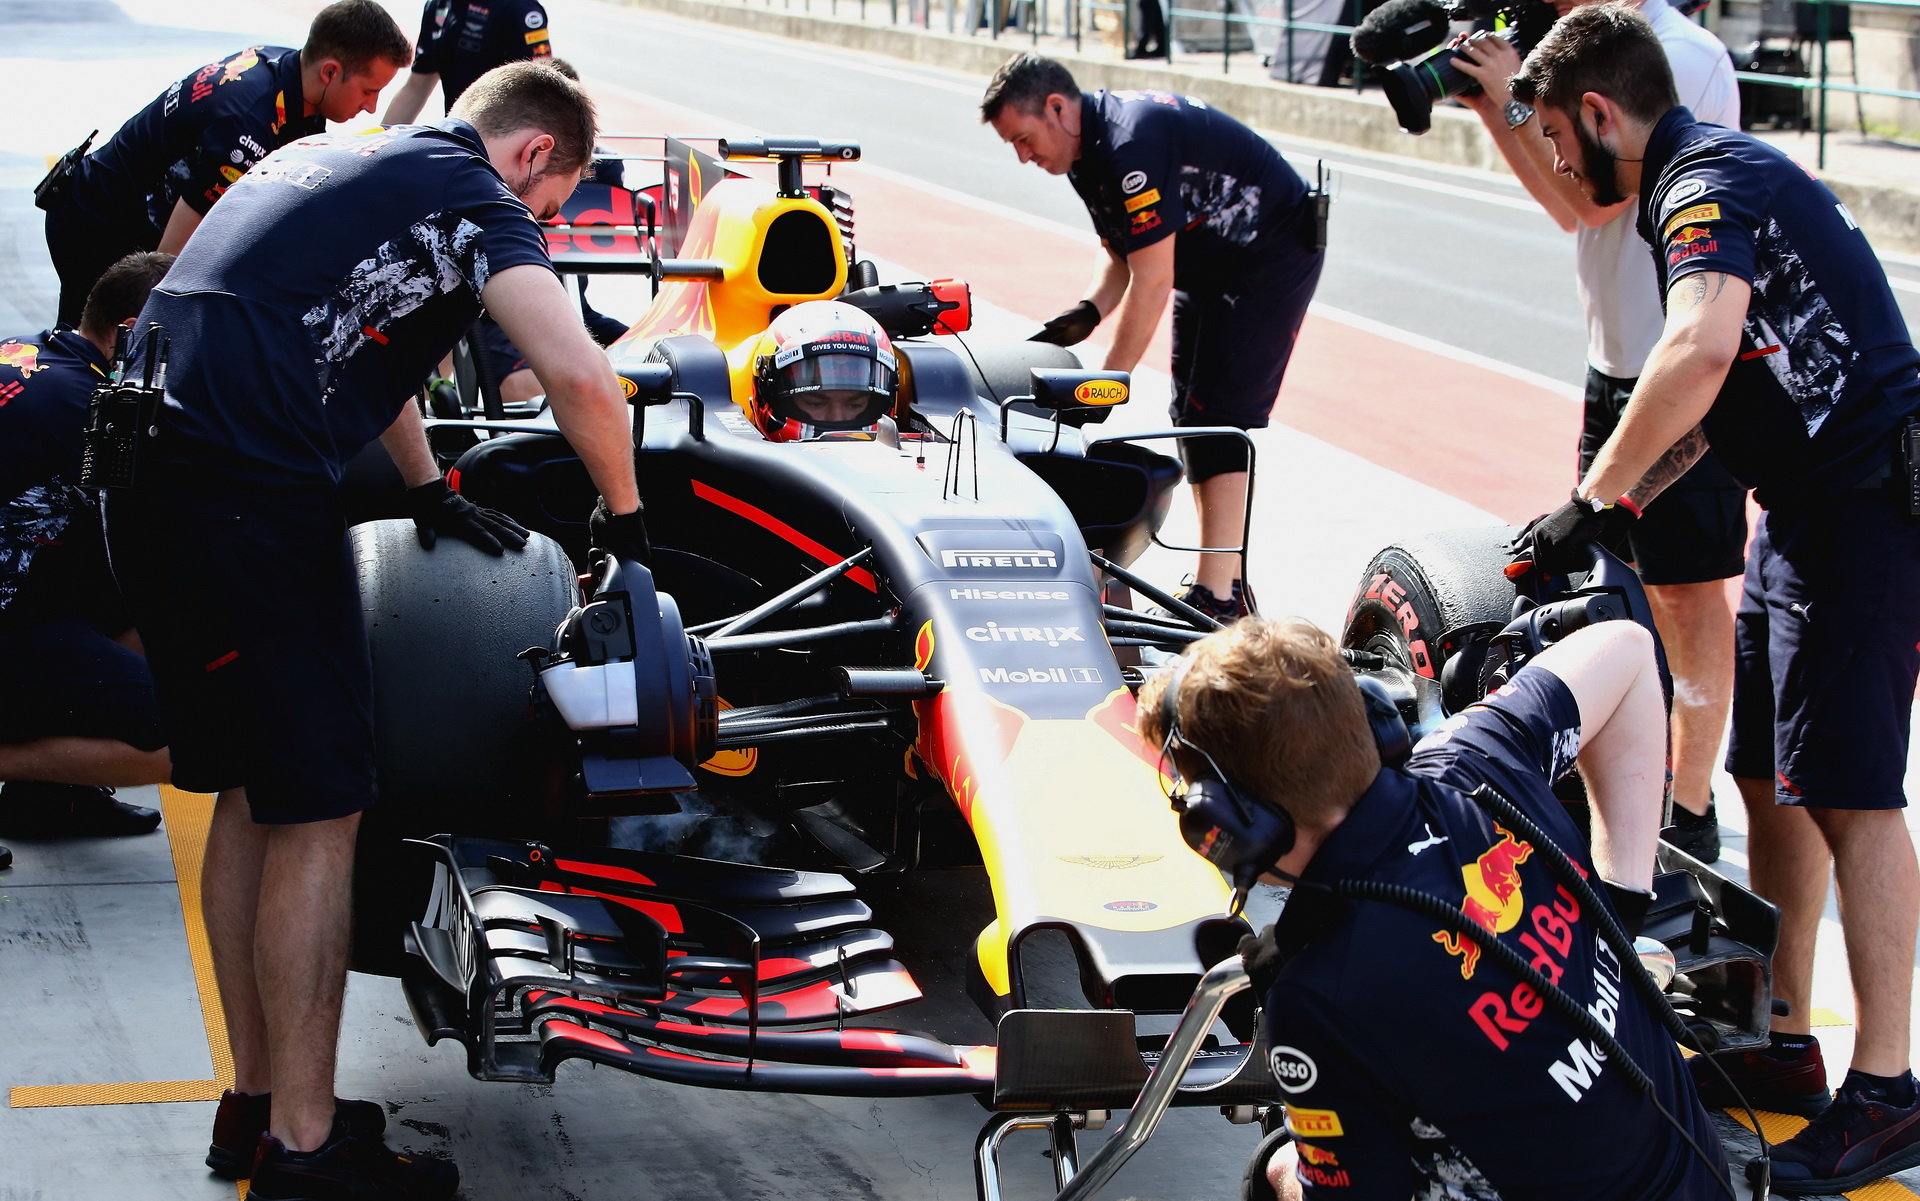 Pierre Gasly testuje druhý den vůz Red Bull RB13 - Renault v Maďarsku